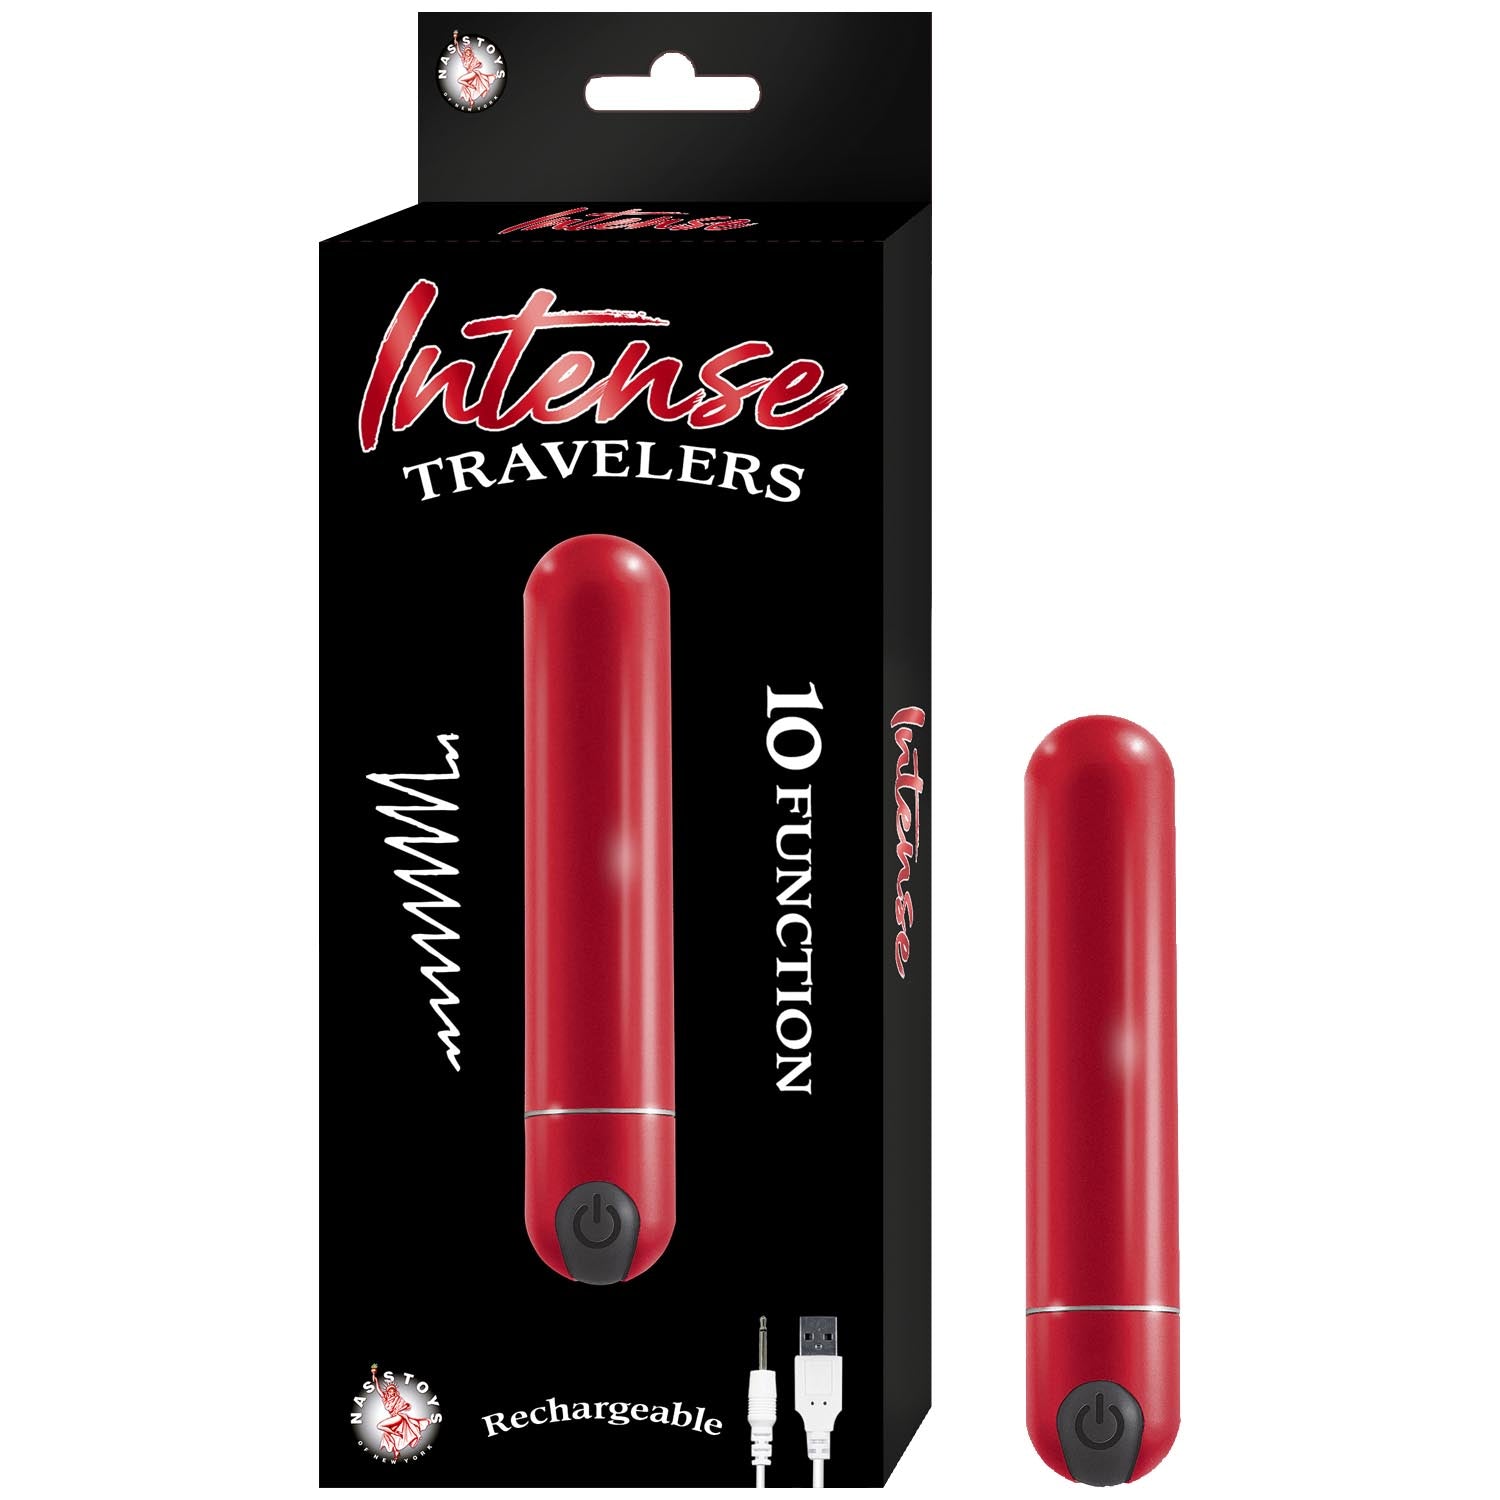 Intense Travelers Magenta Purple Bullet Vibrator Red